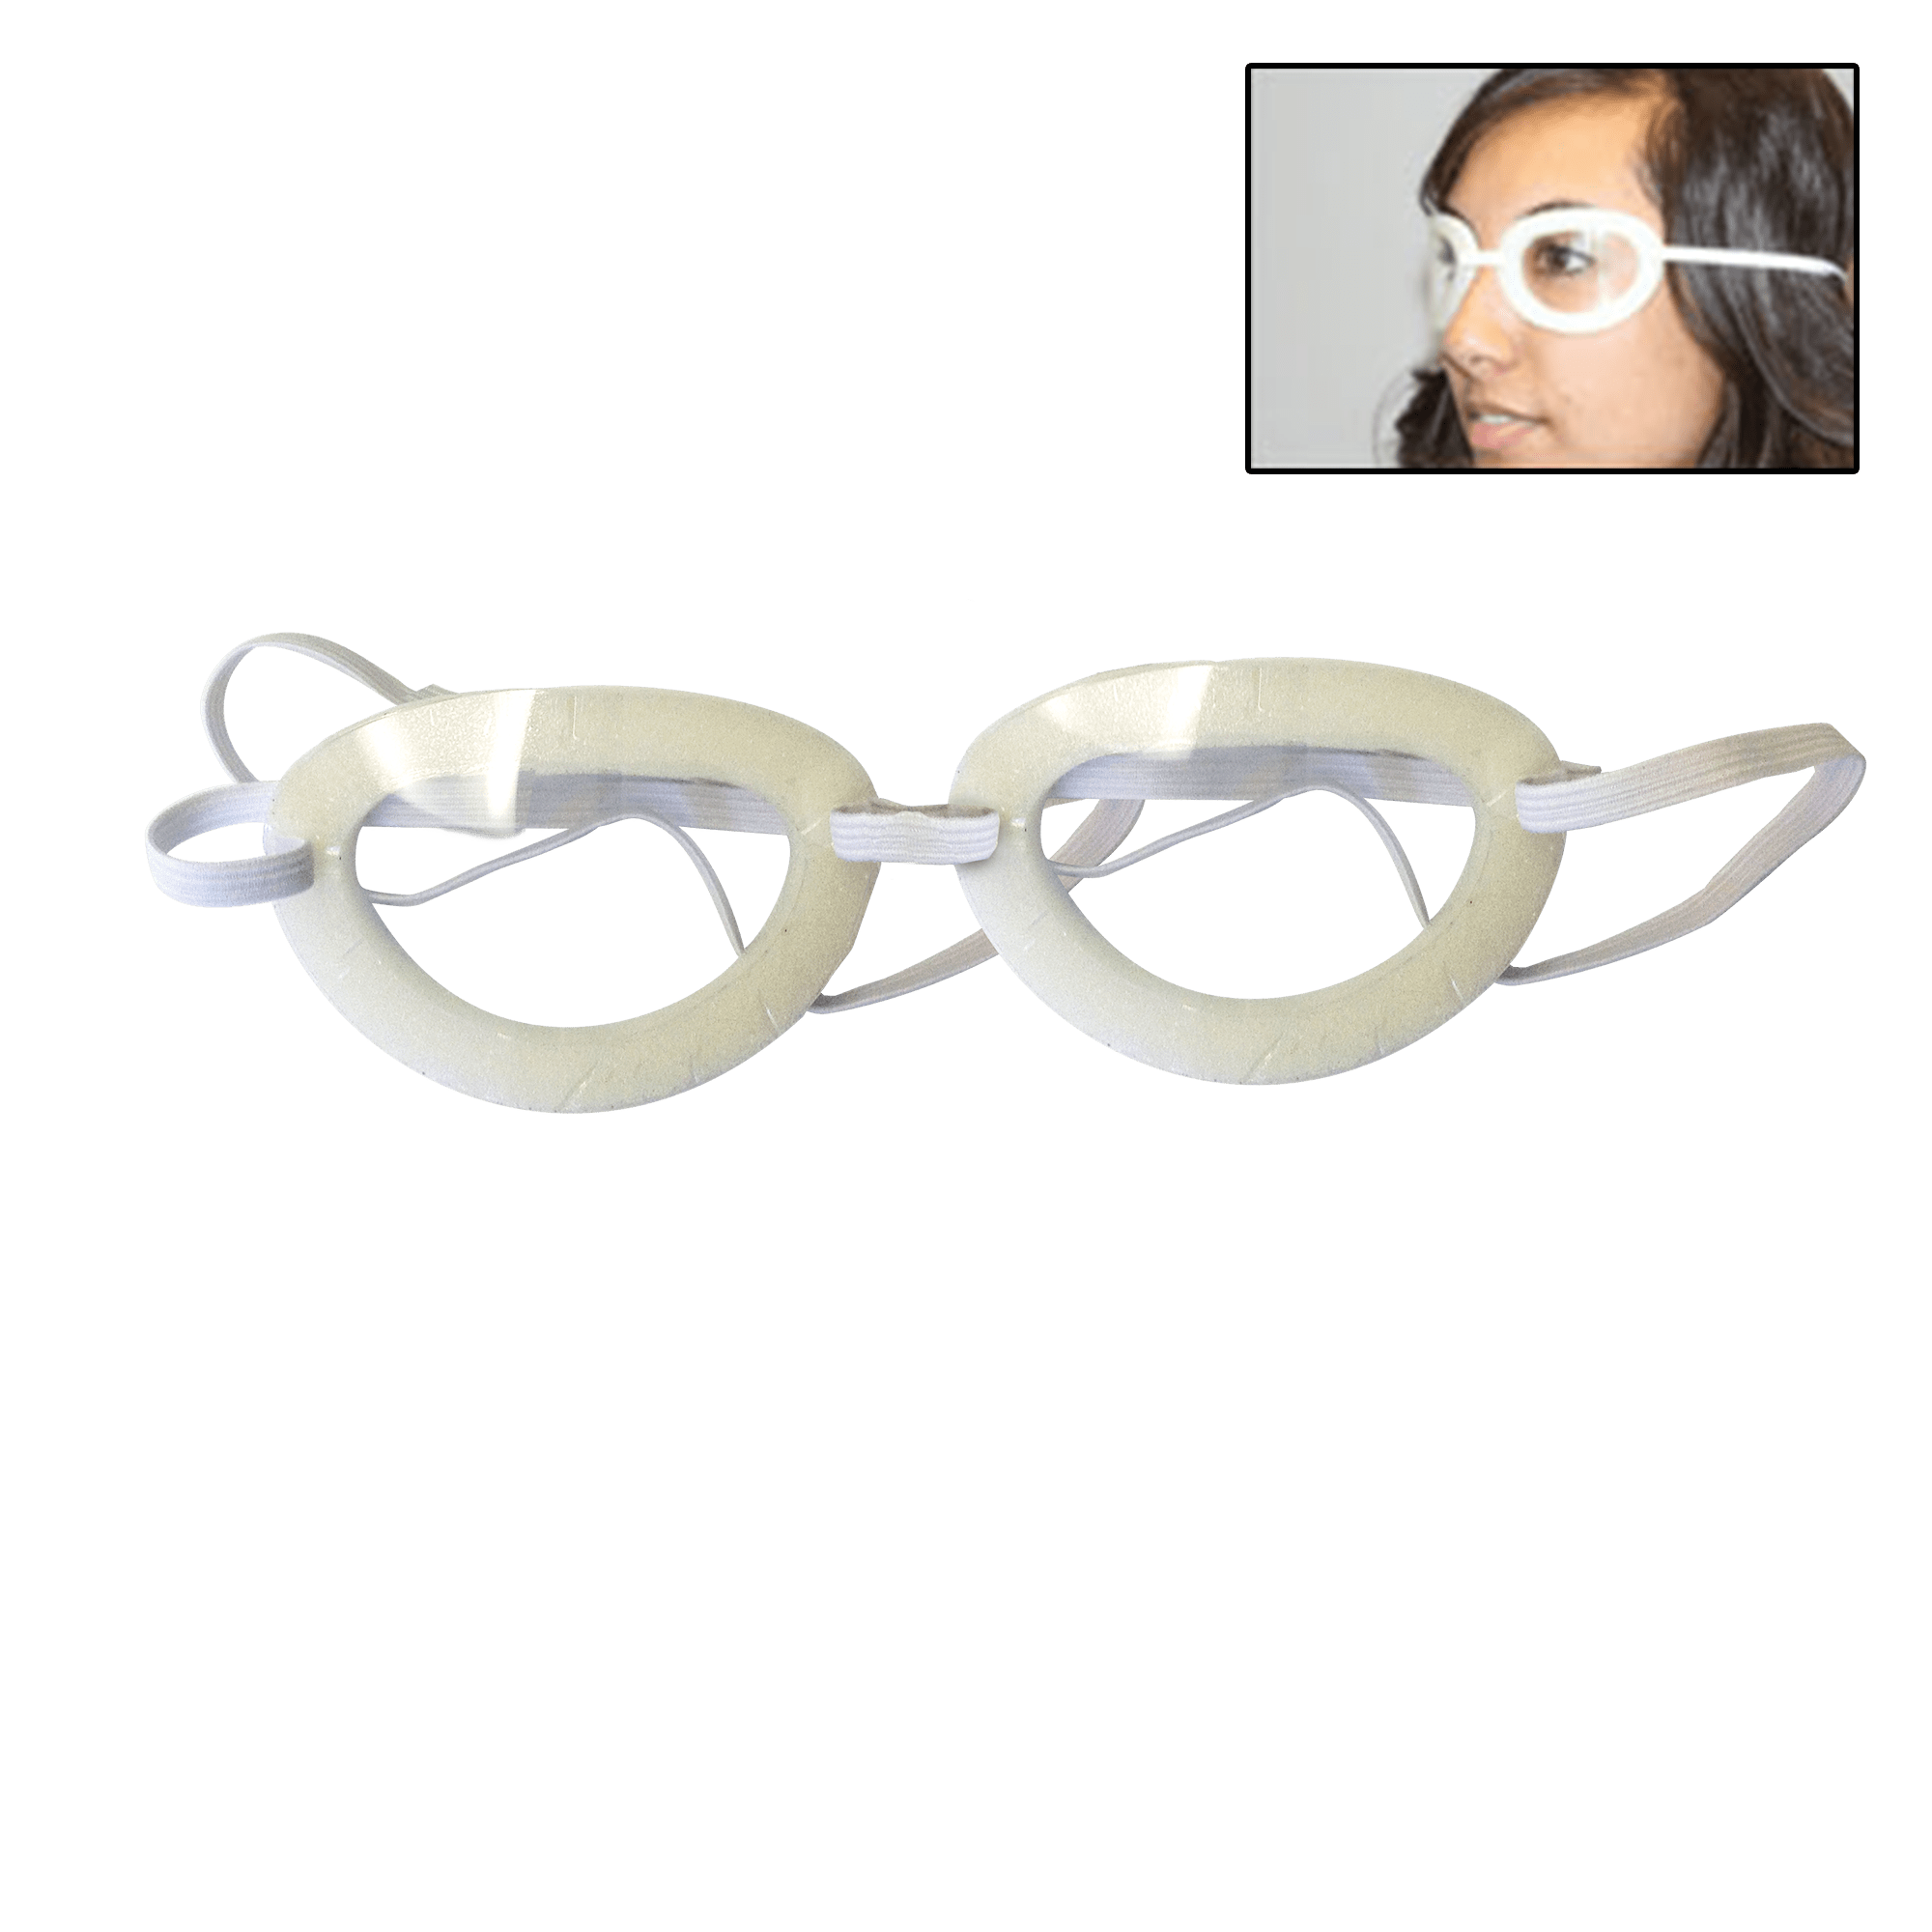 Good-Lite Small Moisture Chamber Goggles